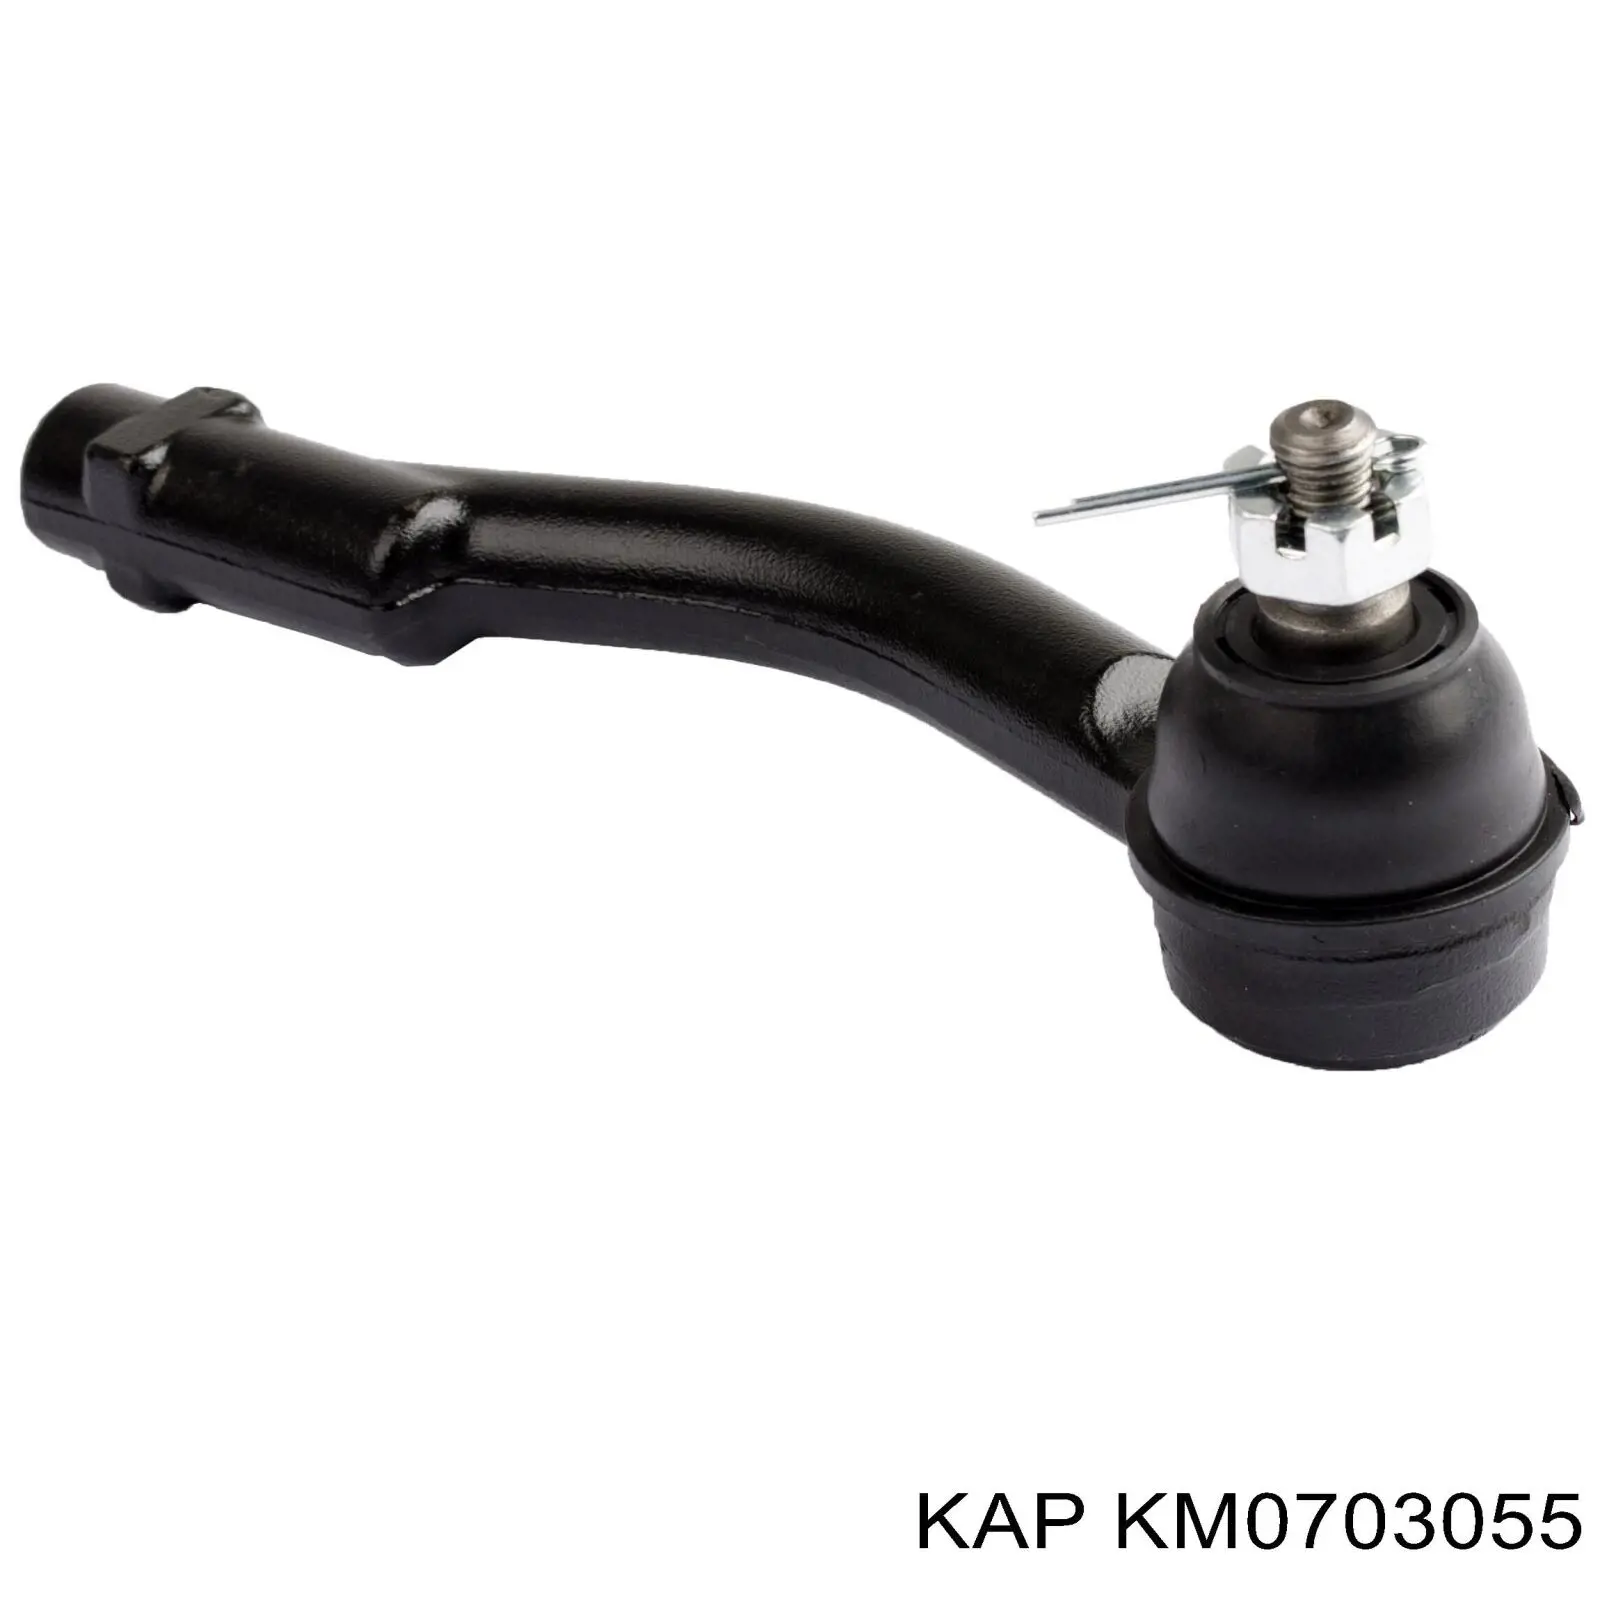 KM0703055 KAP rótula barra de acoplamiento exterior